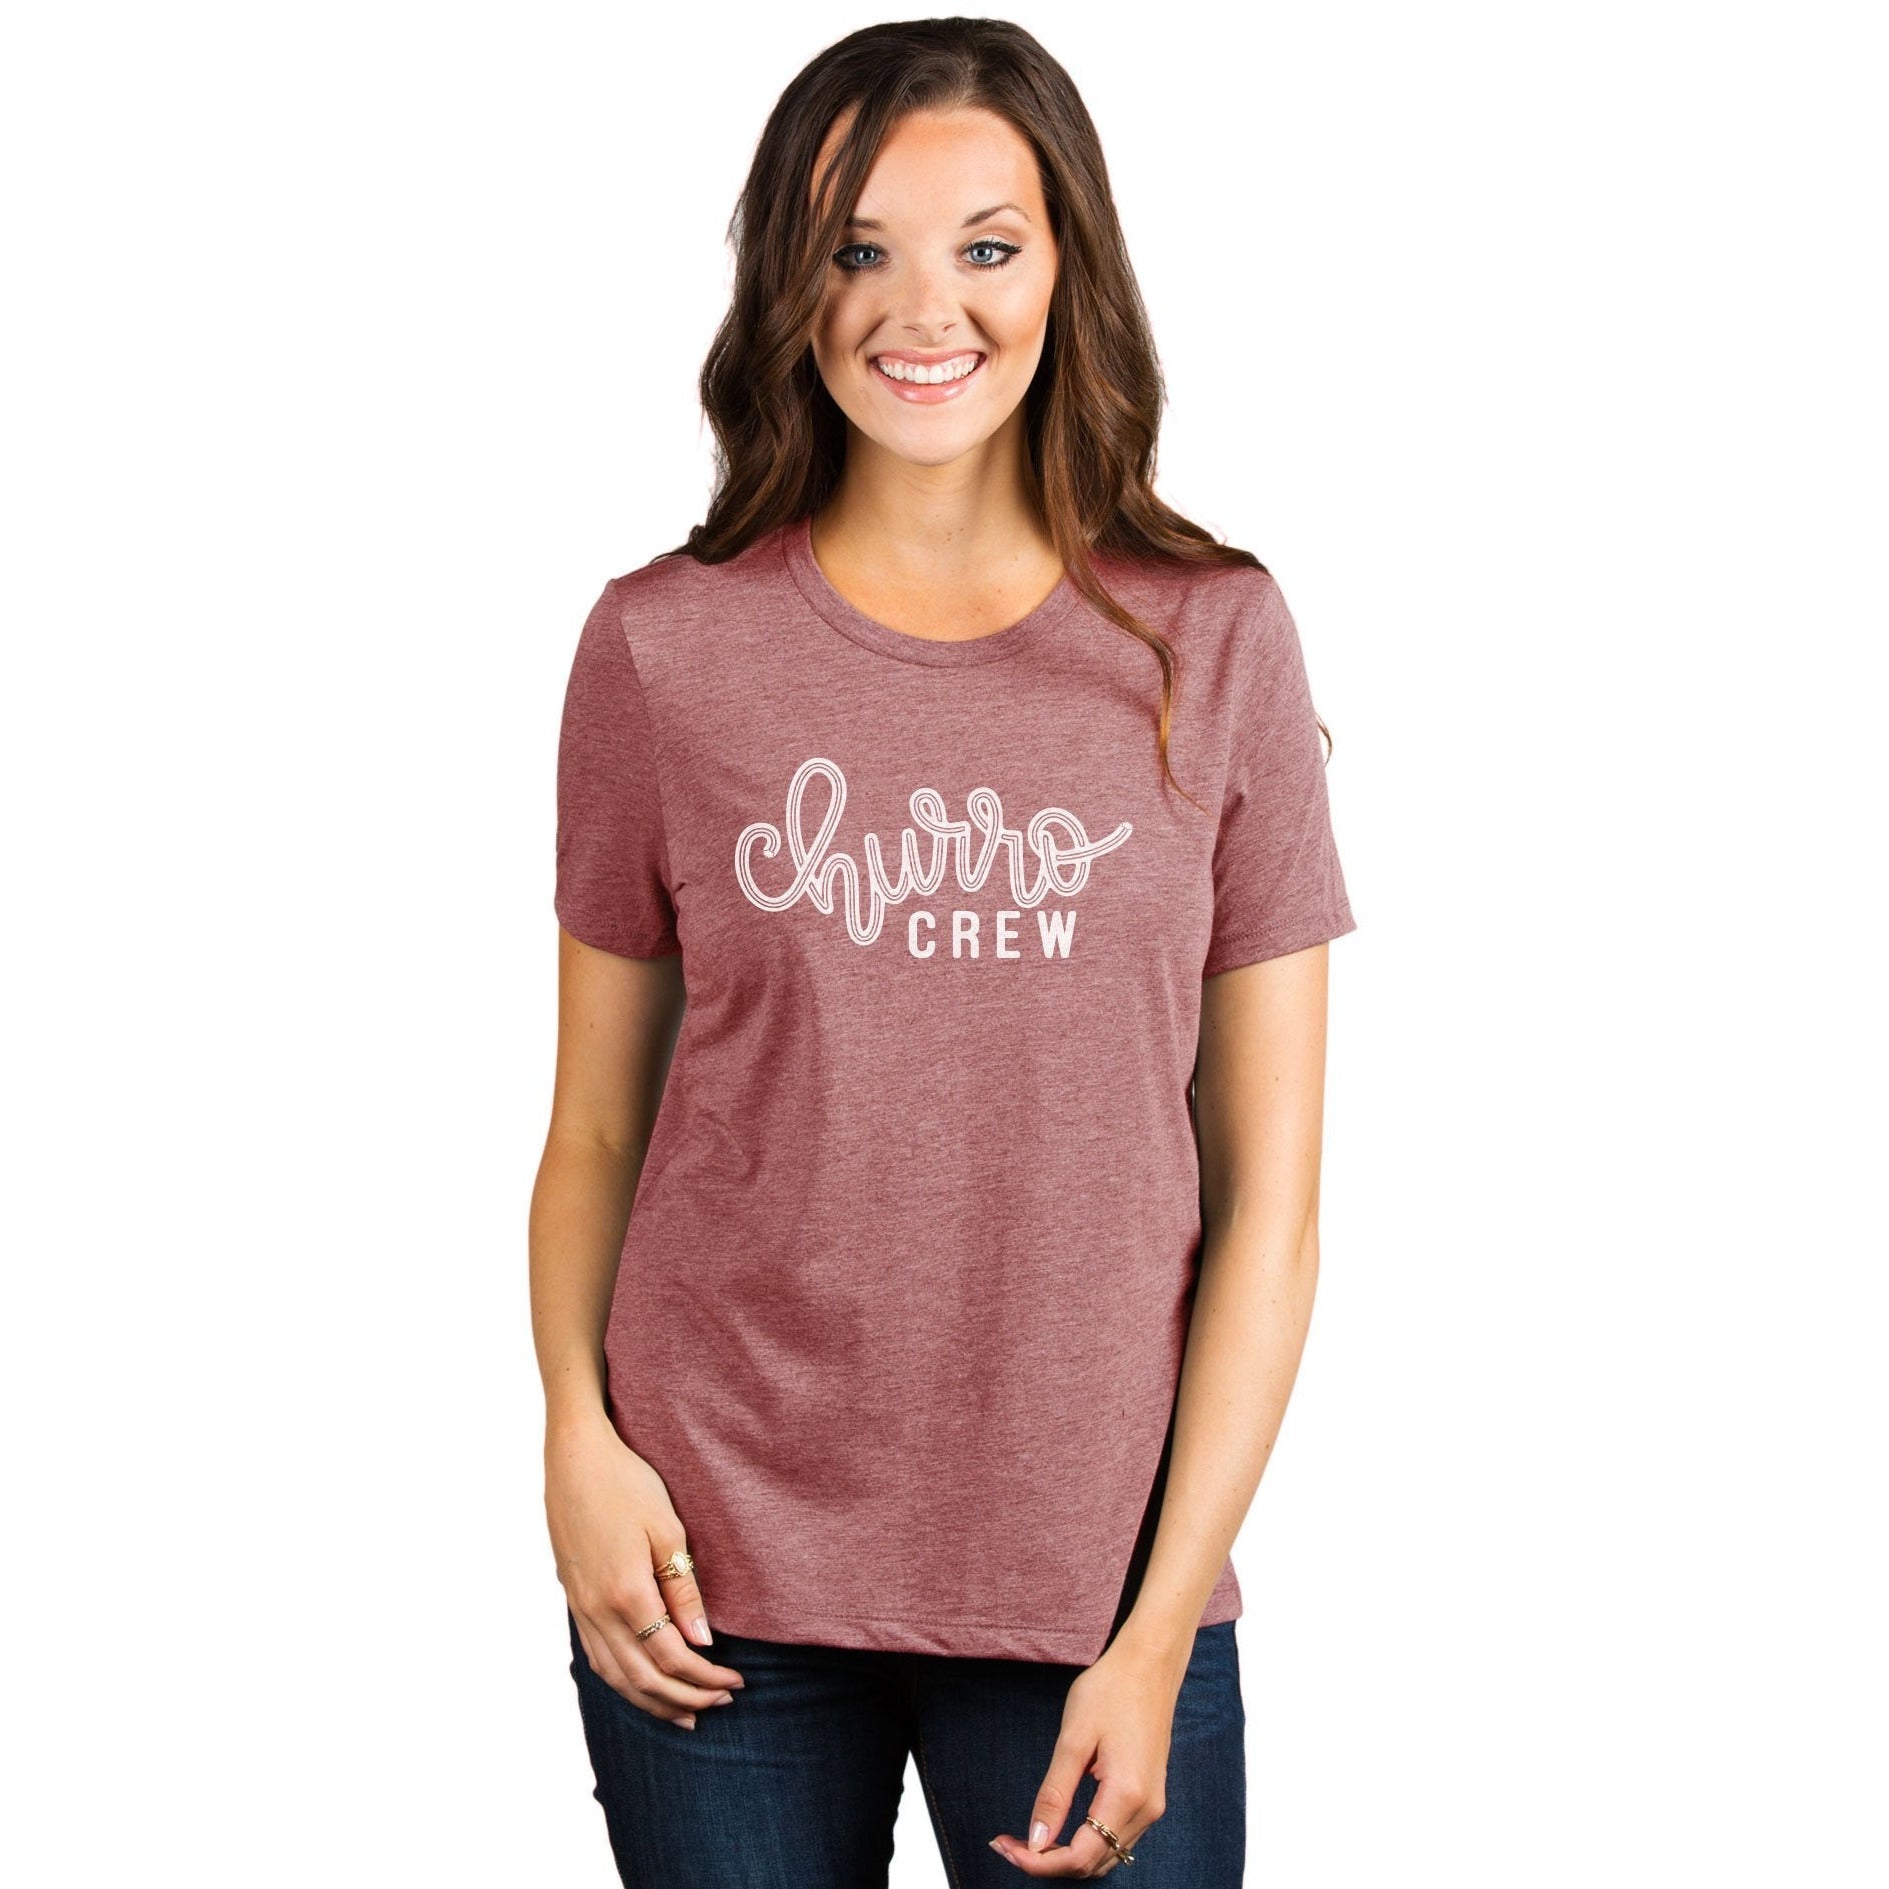 Churro Crew Women's Relaxed Crewneck T-Shirt Top Tee Heather Rouge Model
